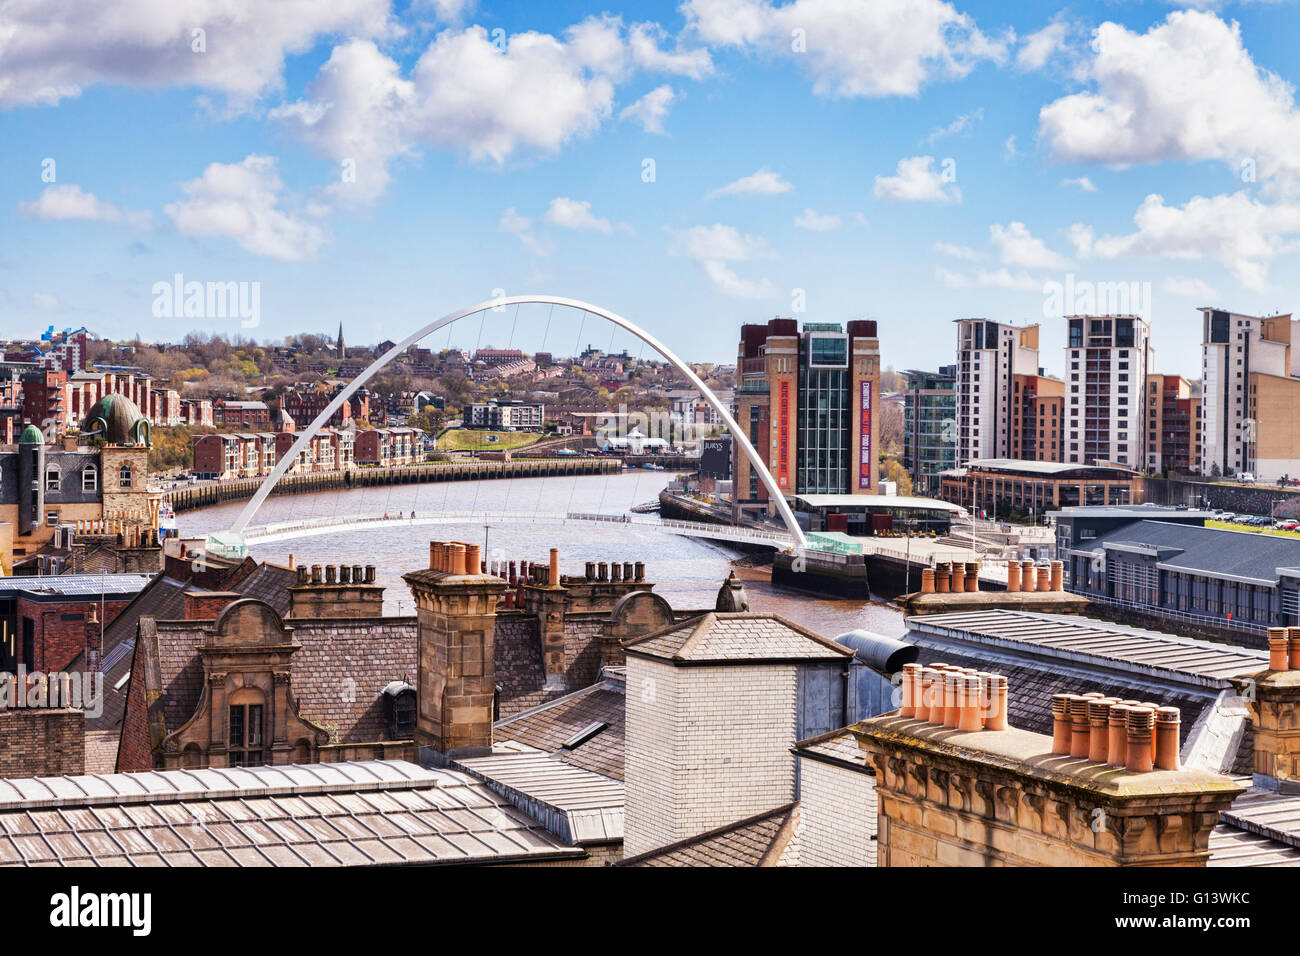 The Newcastle-upon-Tyne skyline, with the Gateshead Millennium Bridge, Tyne and Wear, England, UK Stock Photo